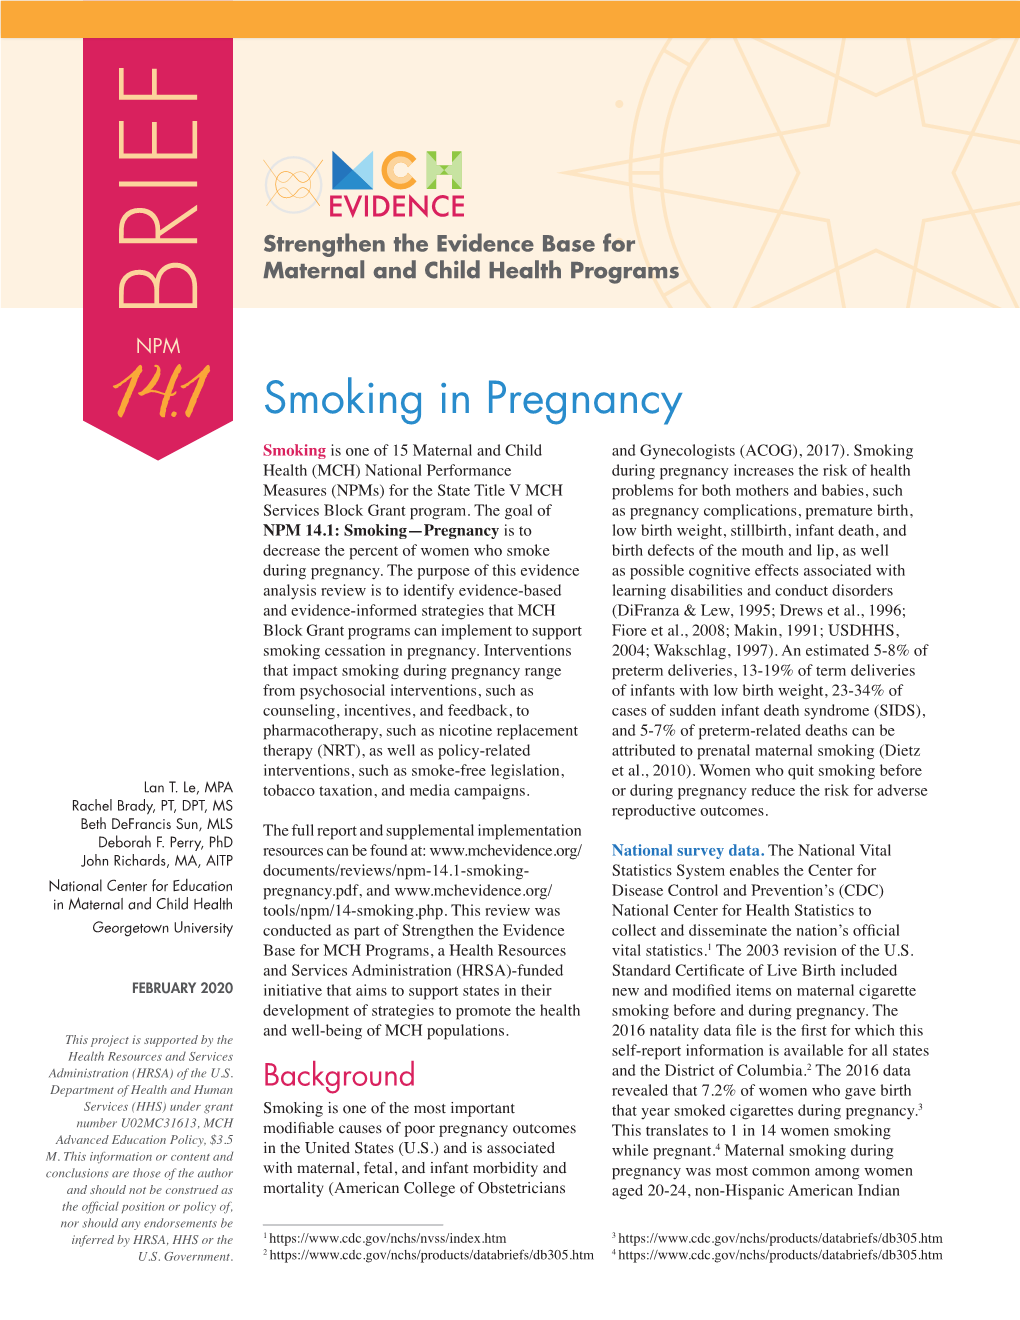 NPM 14.1 Smoking in Pregnancy